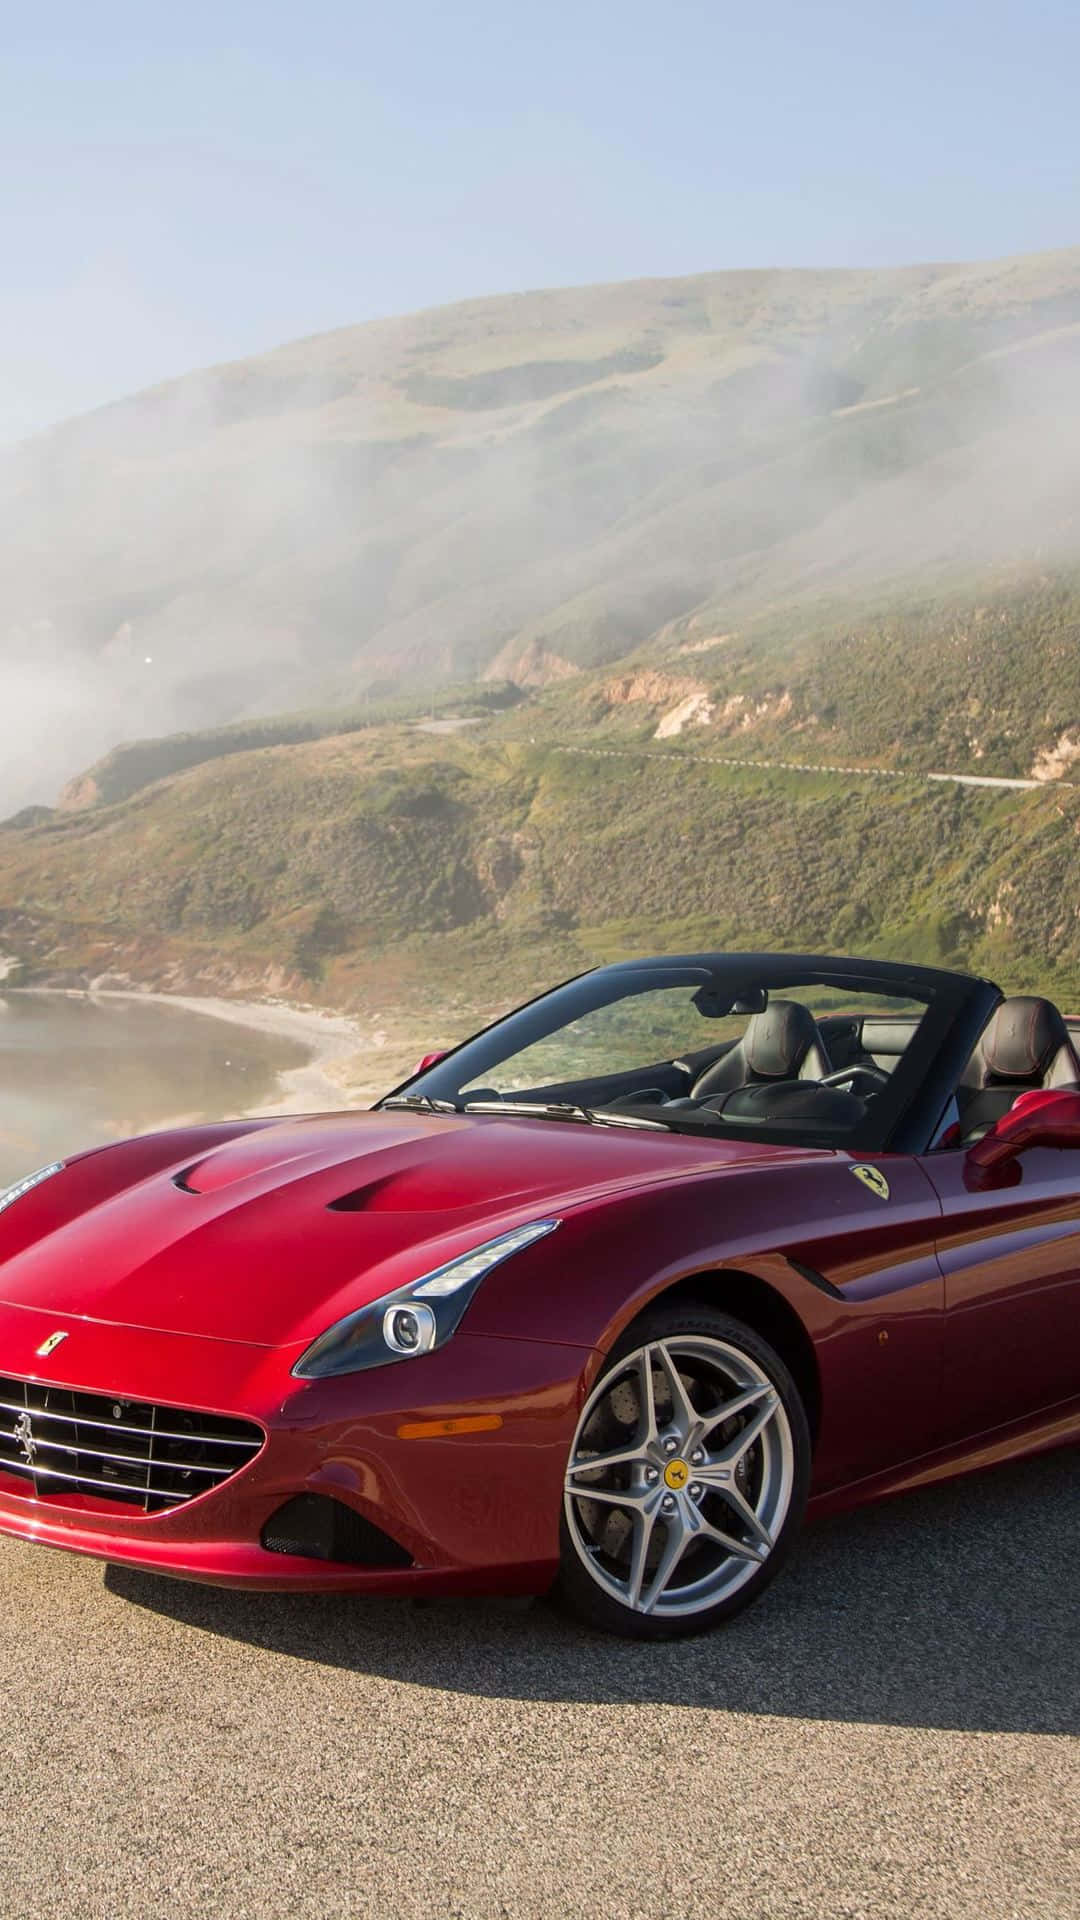 Nyd dine statussymboler - Ferrari iPhone X baggrundsbillede. Wallpaper